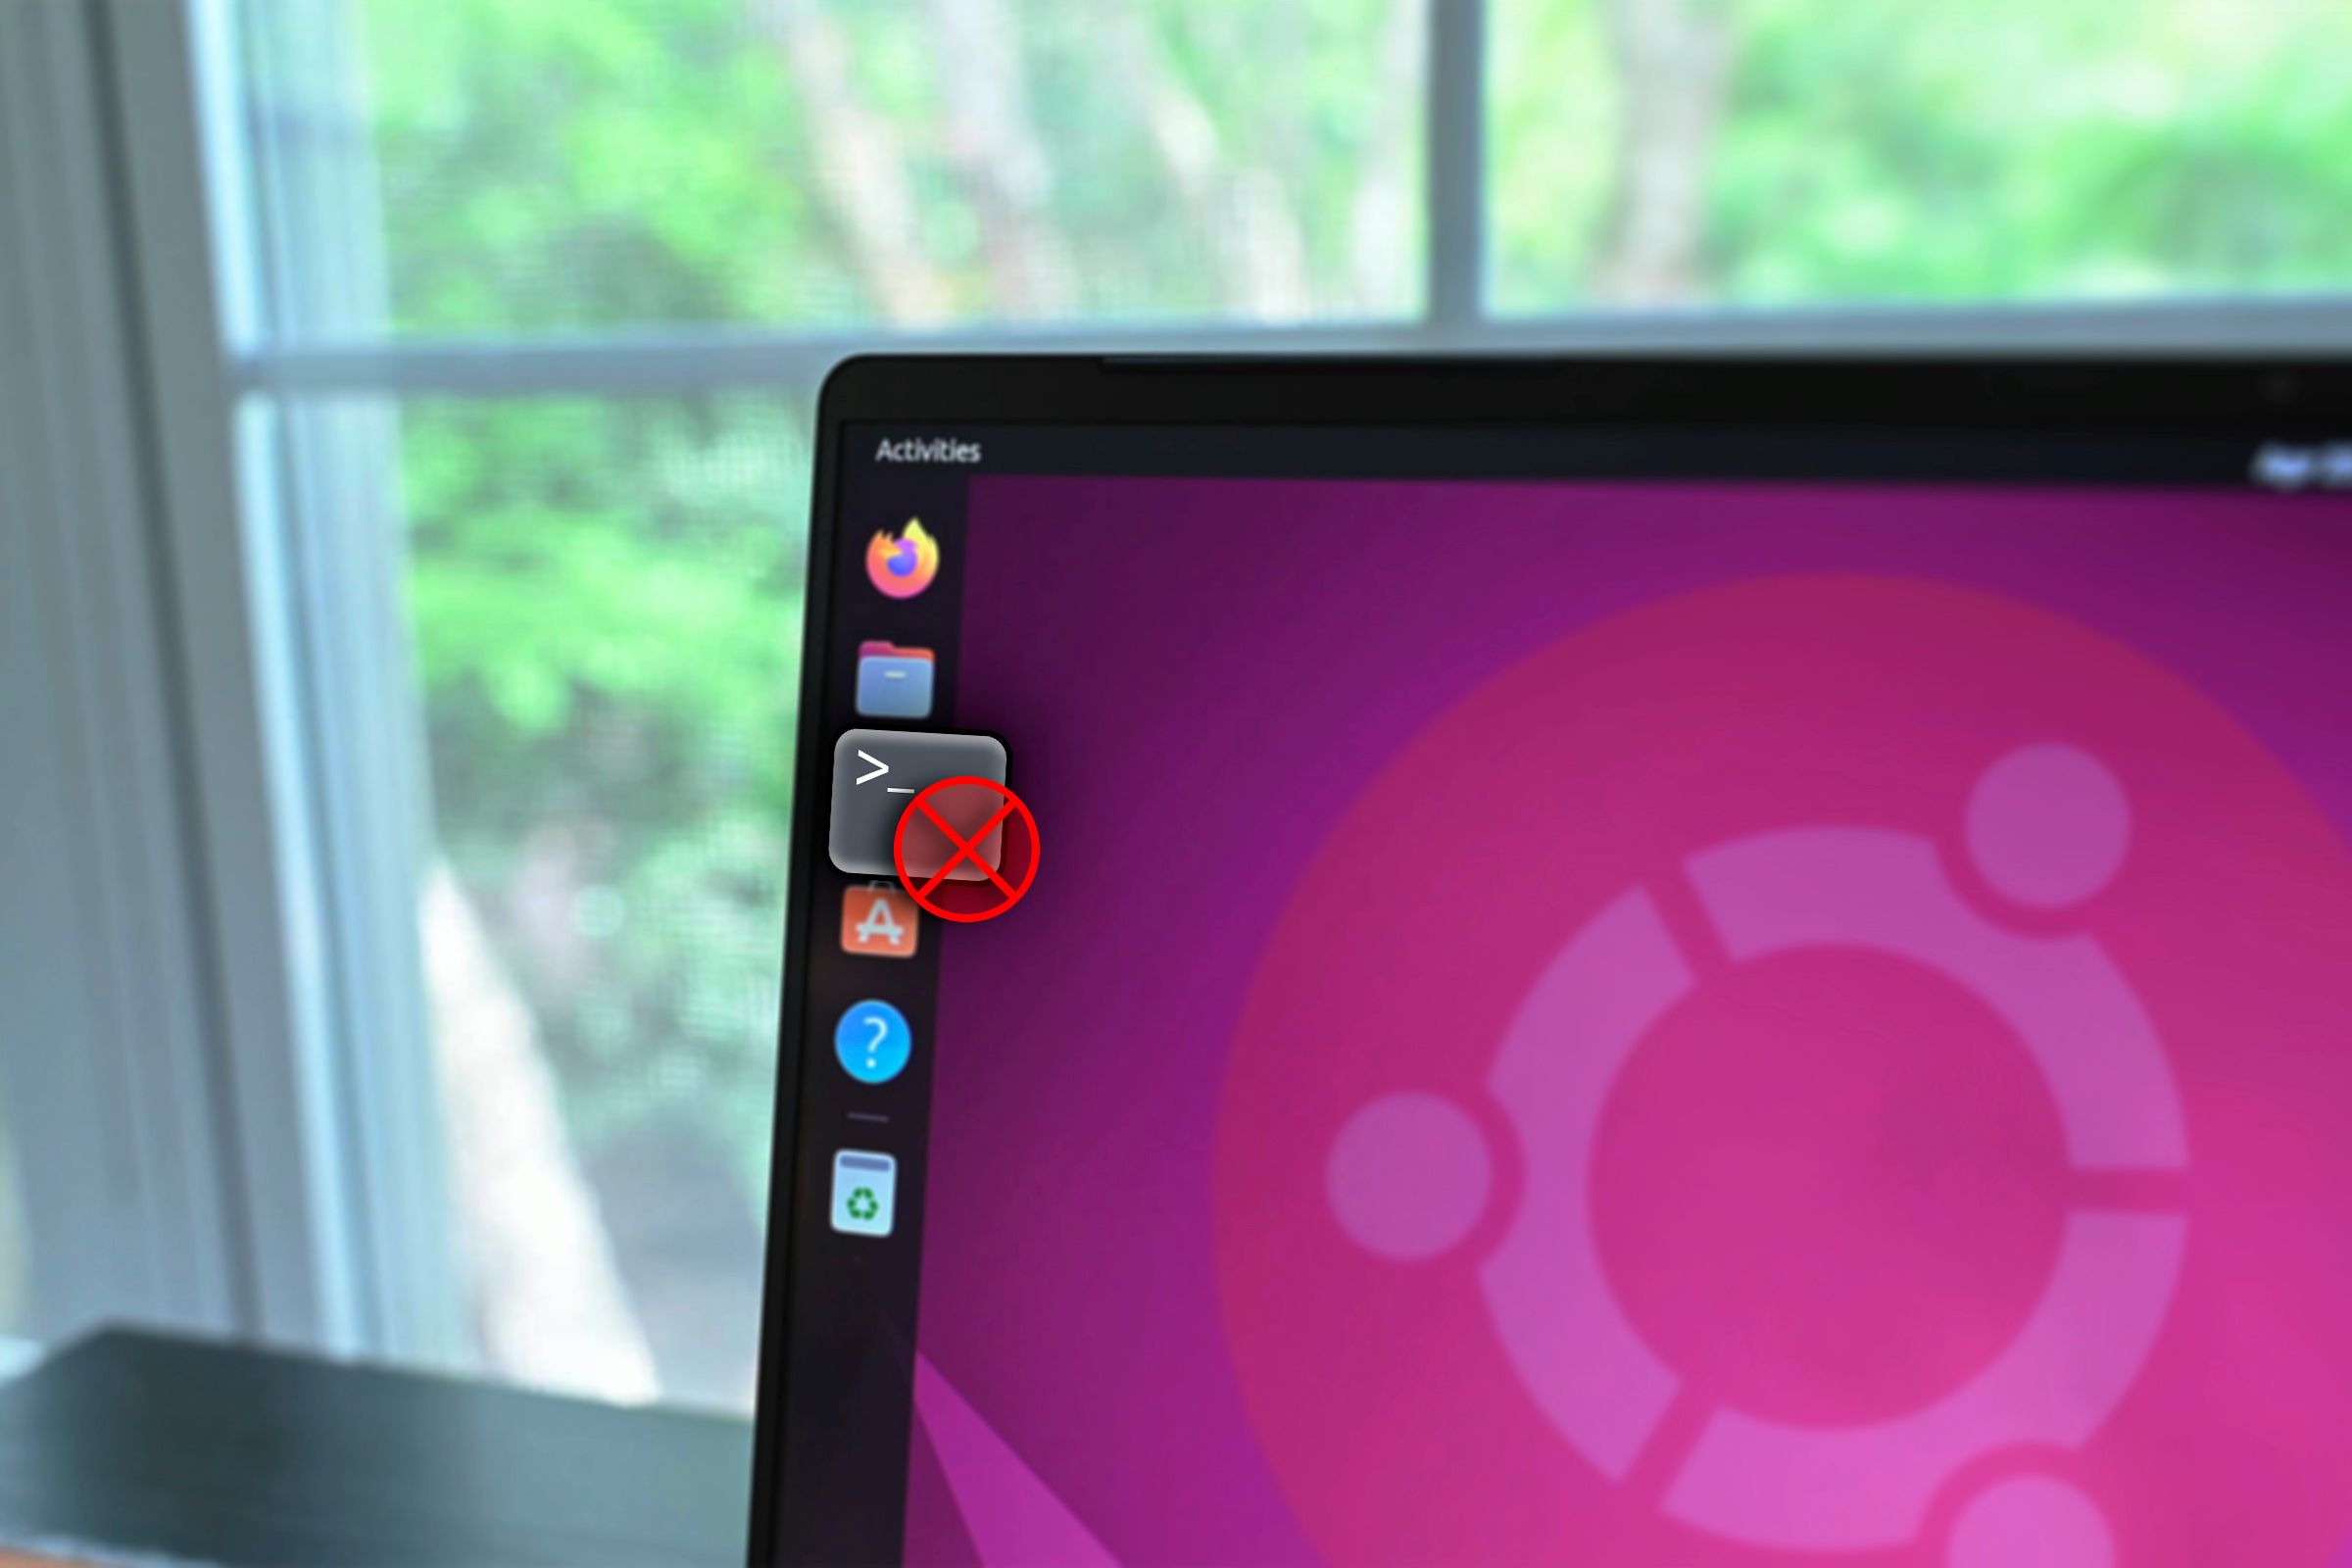 Ubuntu side toolbar showing the terminal